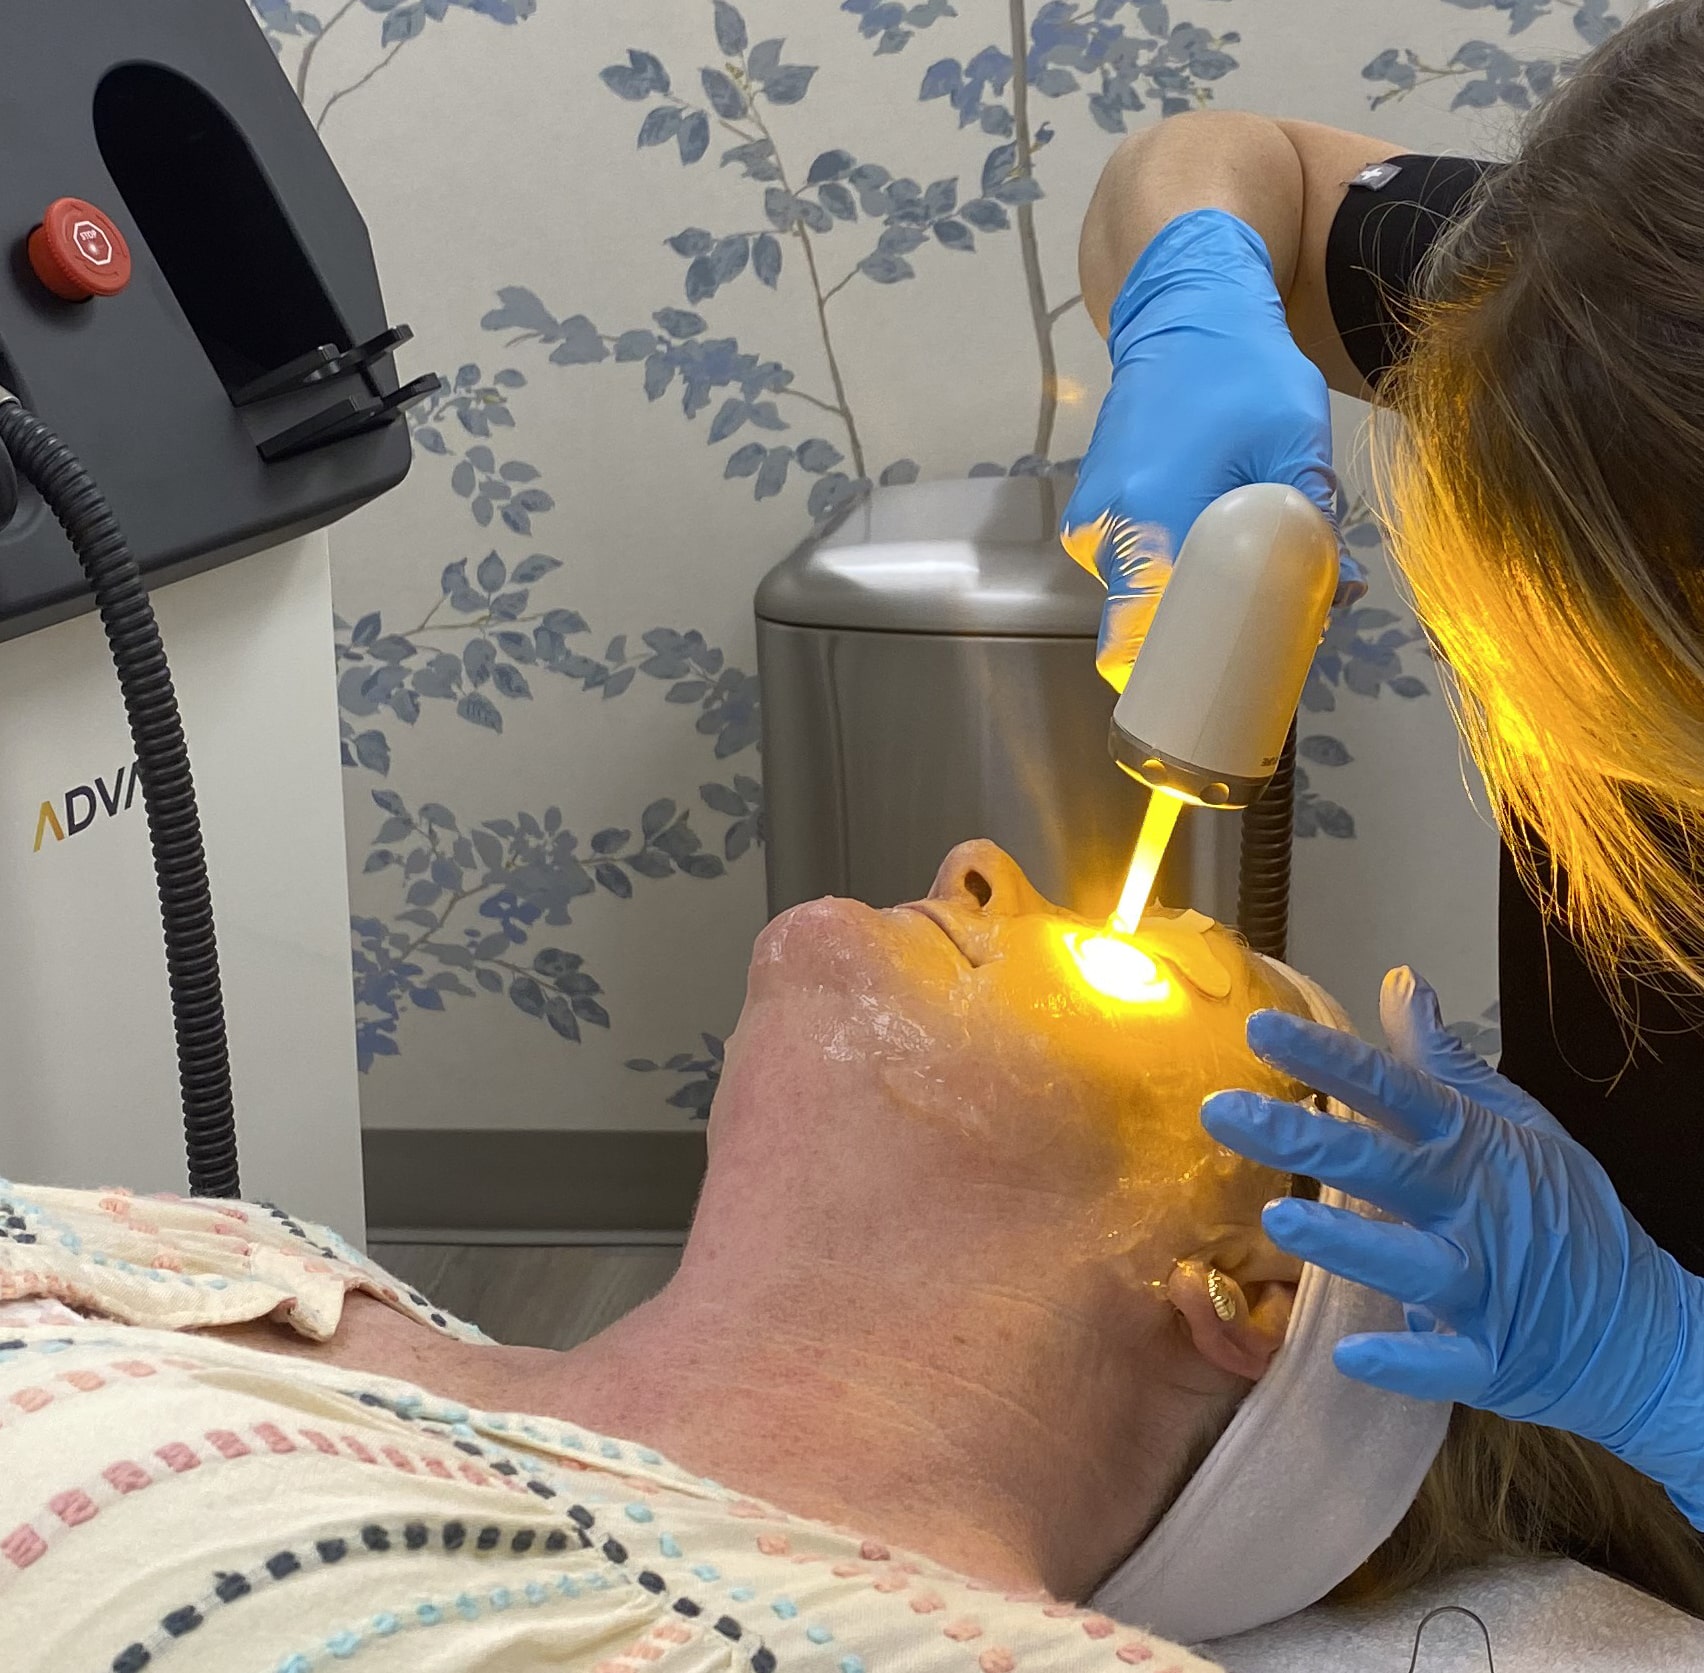 Laser treatment Facial Aesthetics